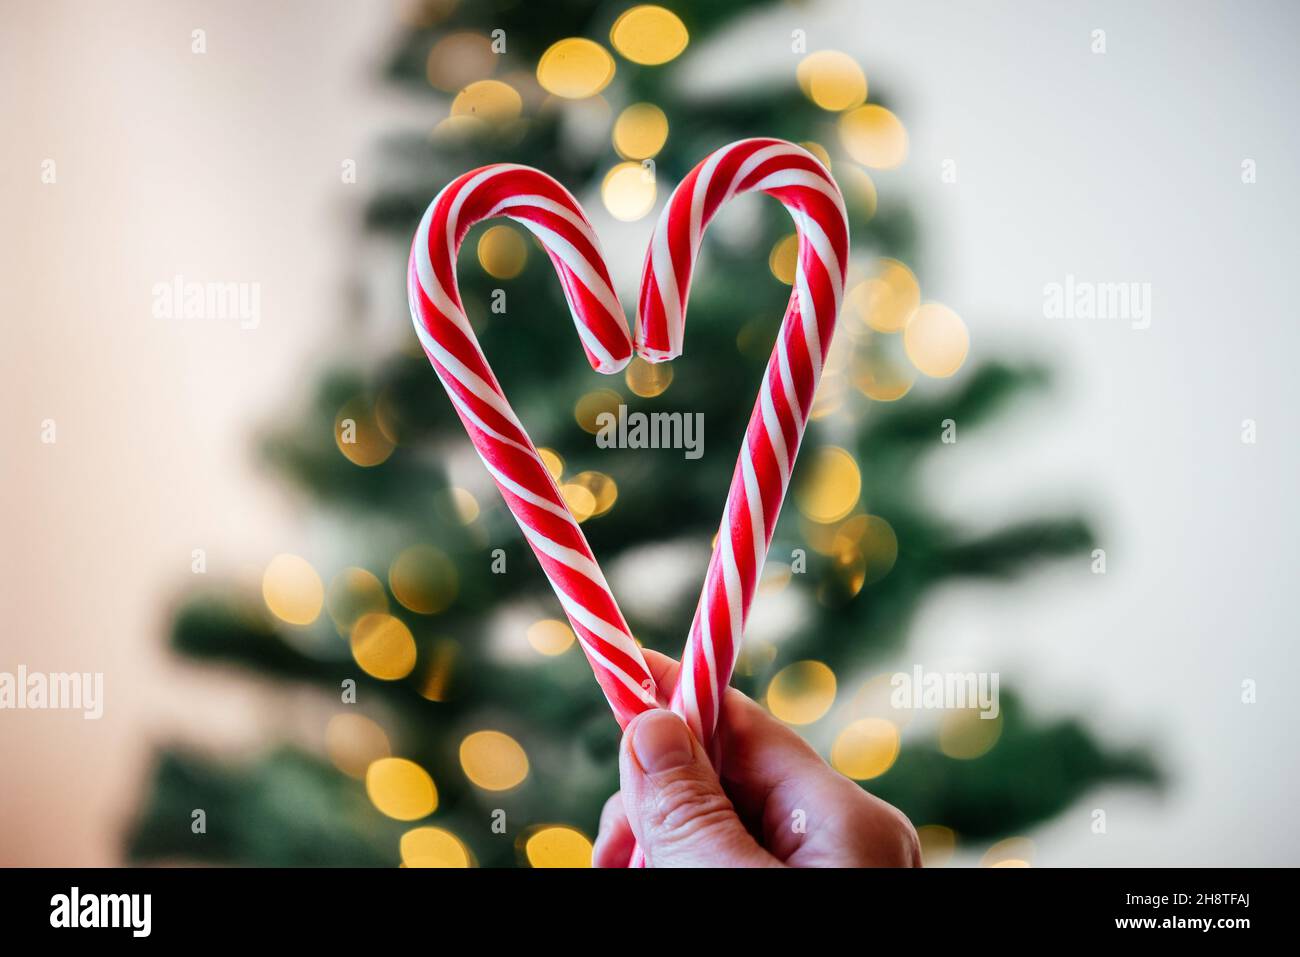 https://c8.alamy.com/comp/2H8TFAJ/hands-holding-candy-canes-in-the-shape-of-heart-against-christmas-tree-lights-bokeh-2H8TFAJ.jpg